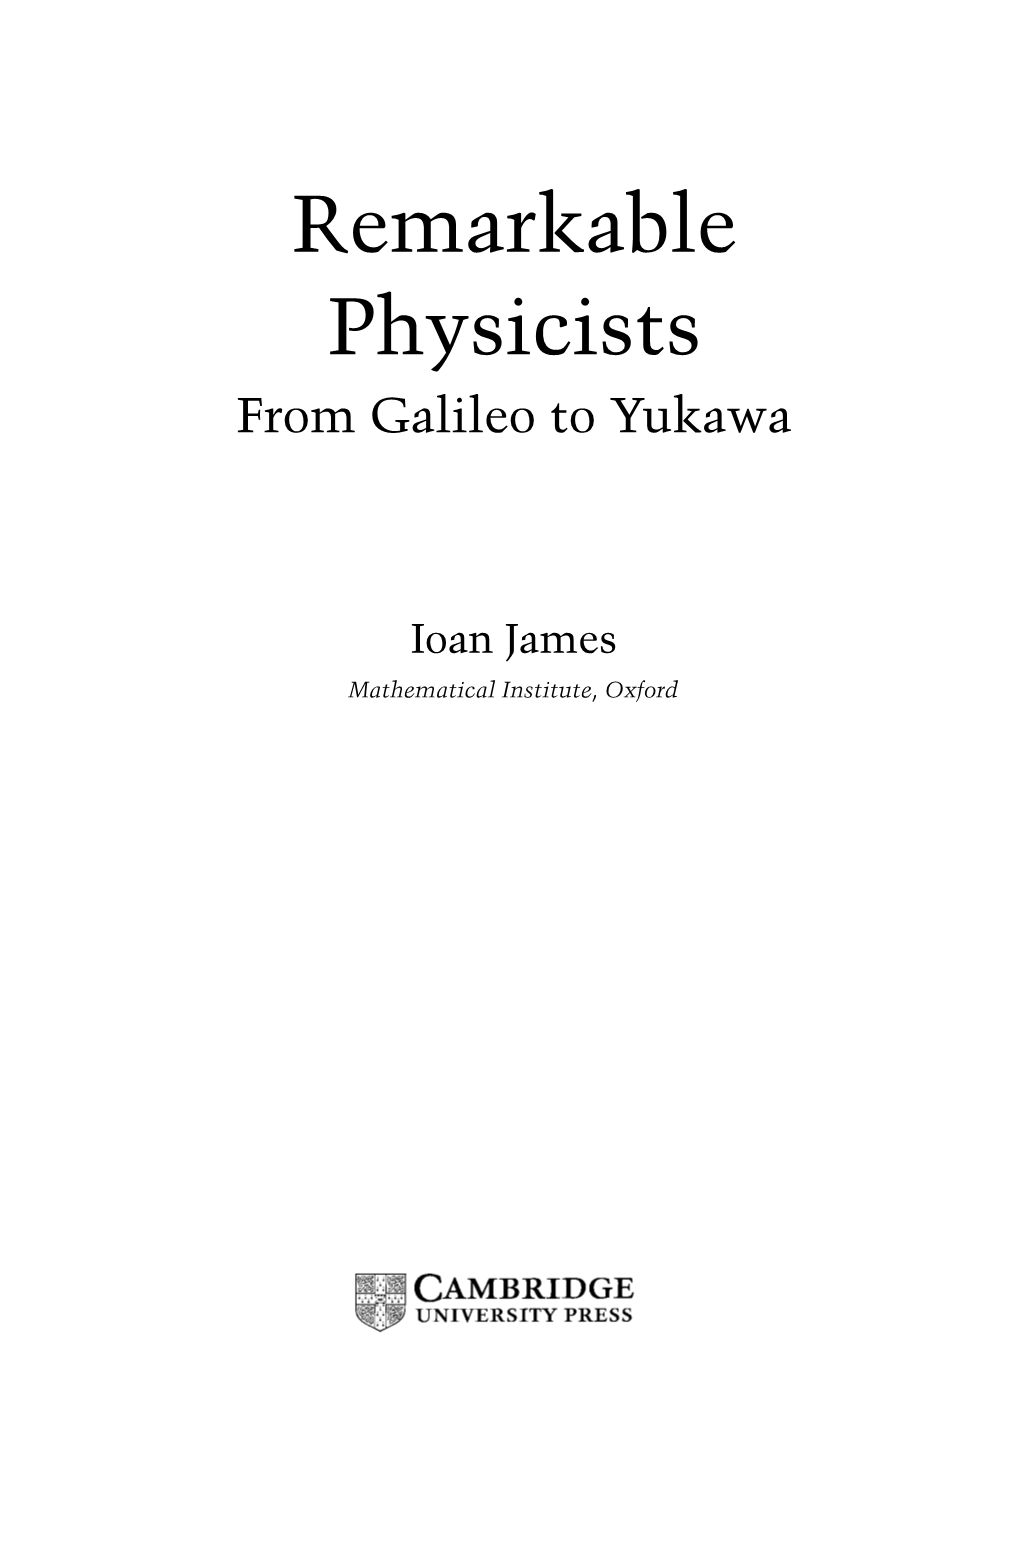 Remarkable Physicists from Galileo to Yukawa